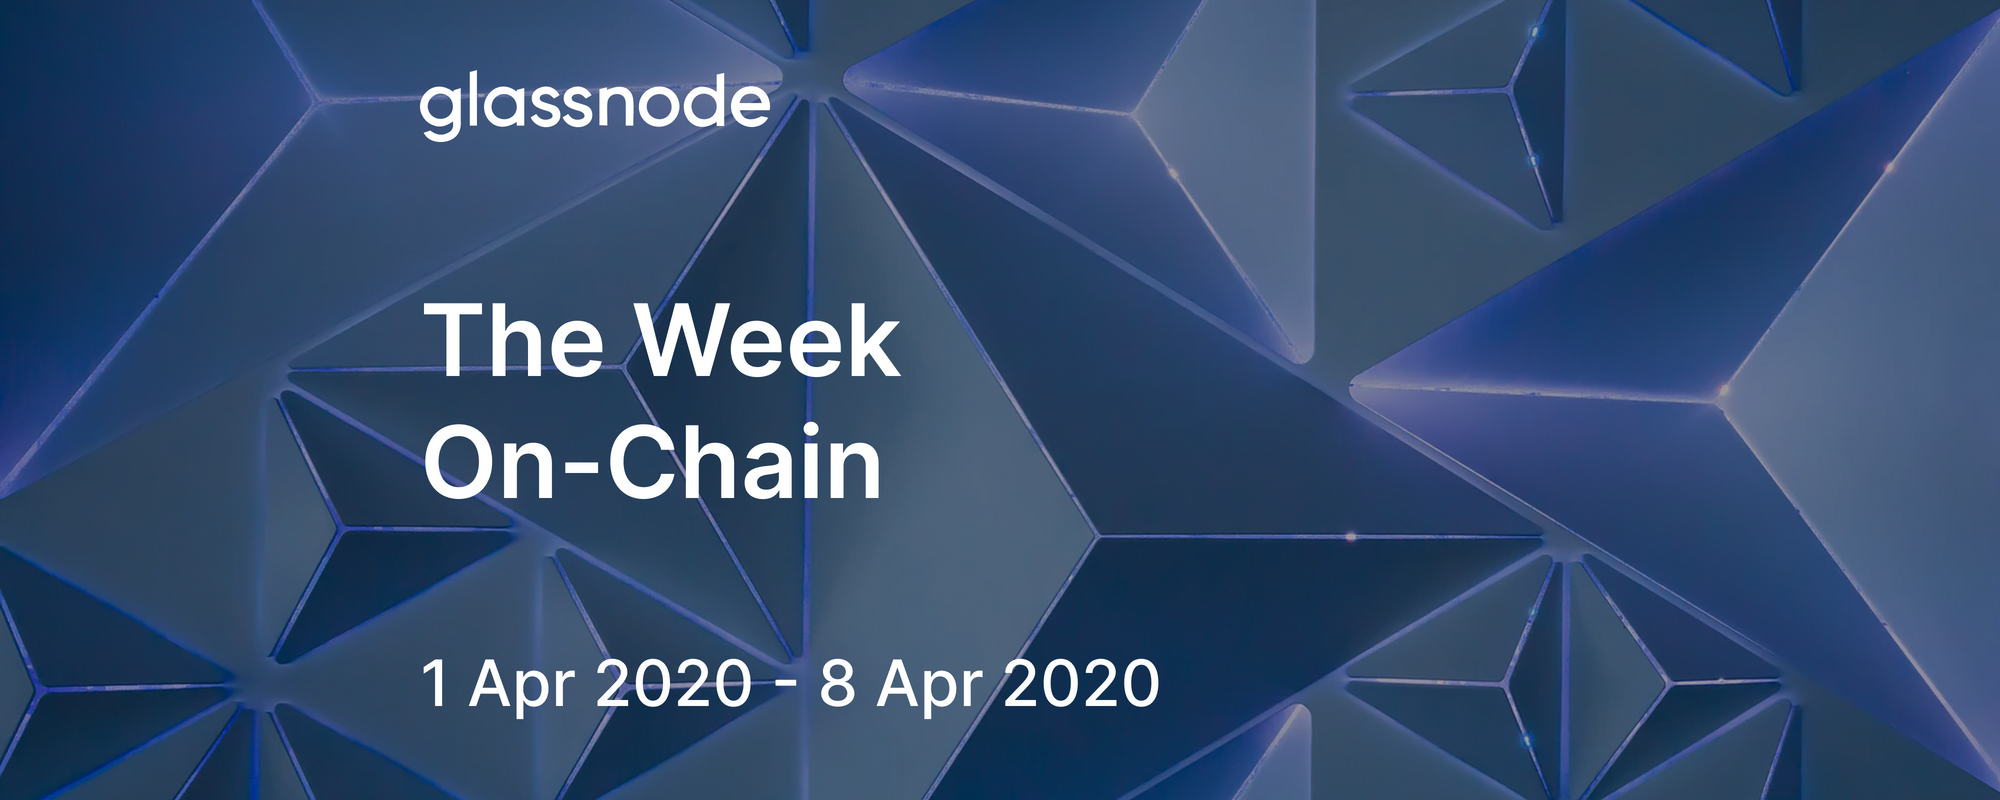 The Week On-Chain (1 Apr 2020 - 8 Apr 2020)